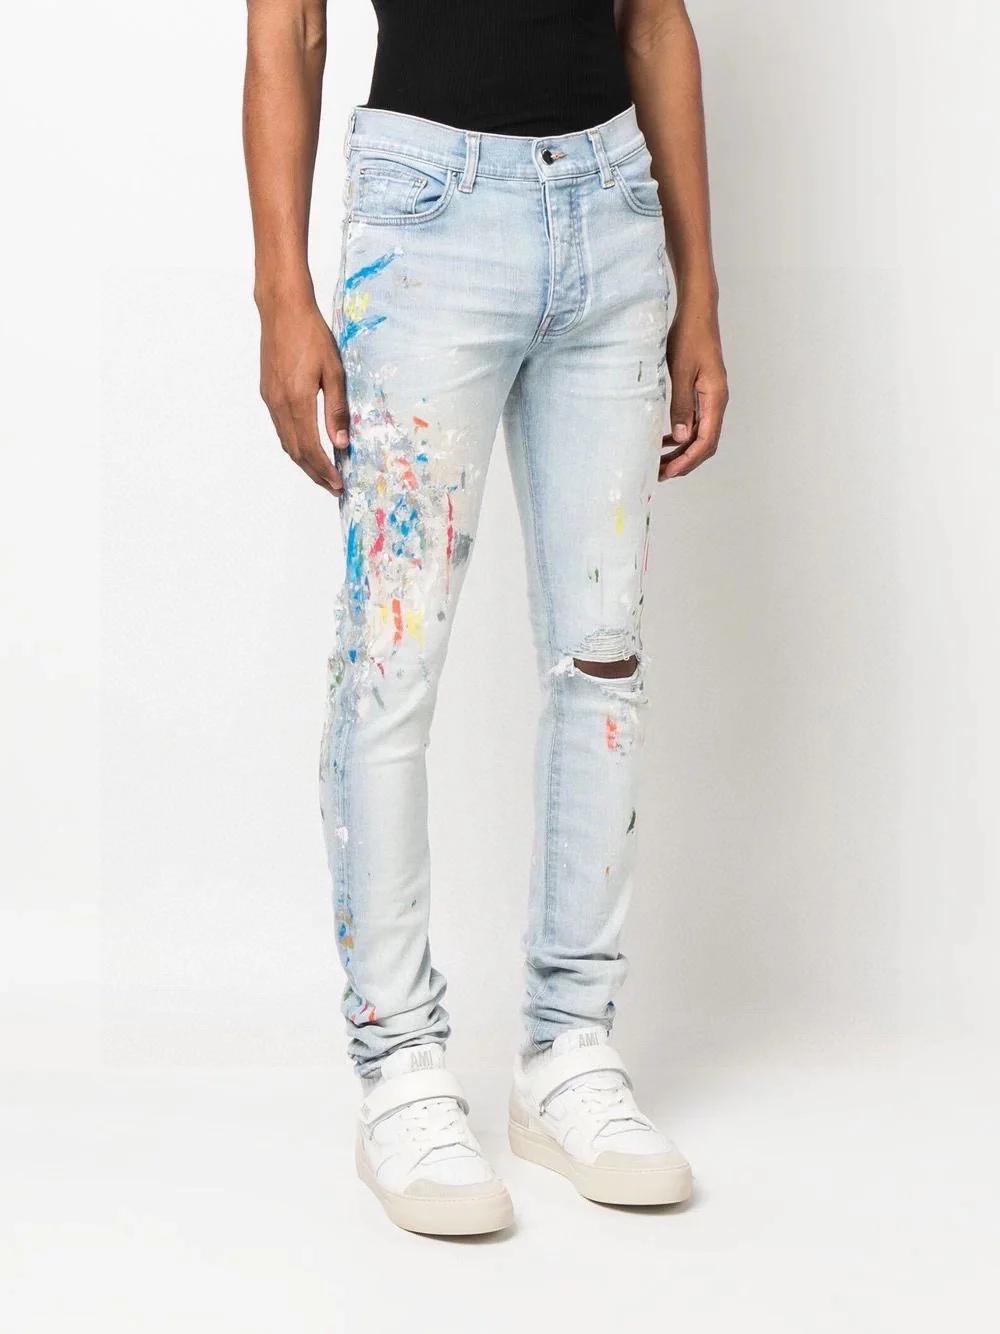 

paint-splatter skinny jeans Man Logo Patch distressed skinny jeans Buy mens denim fashion Ripped Destroyed Denim moto pants